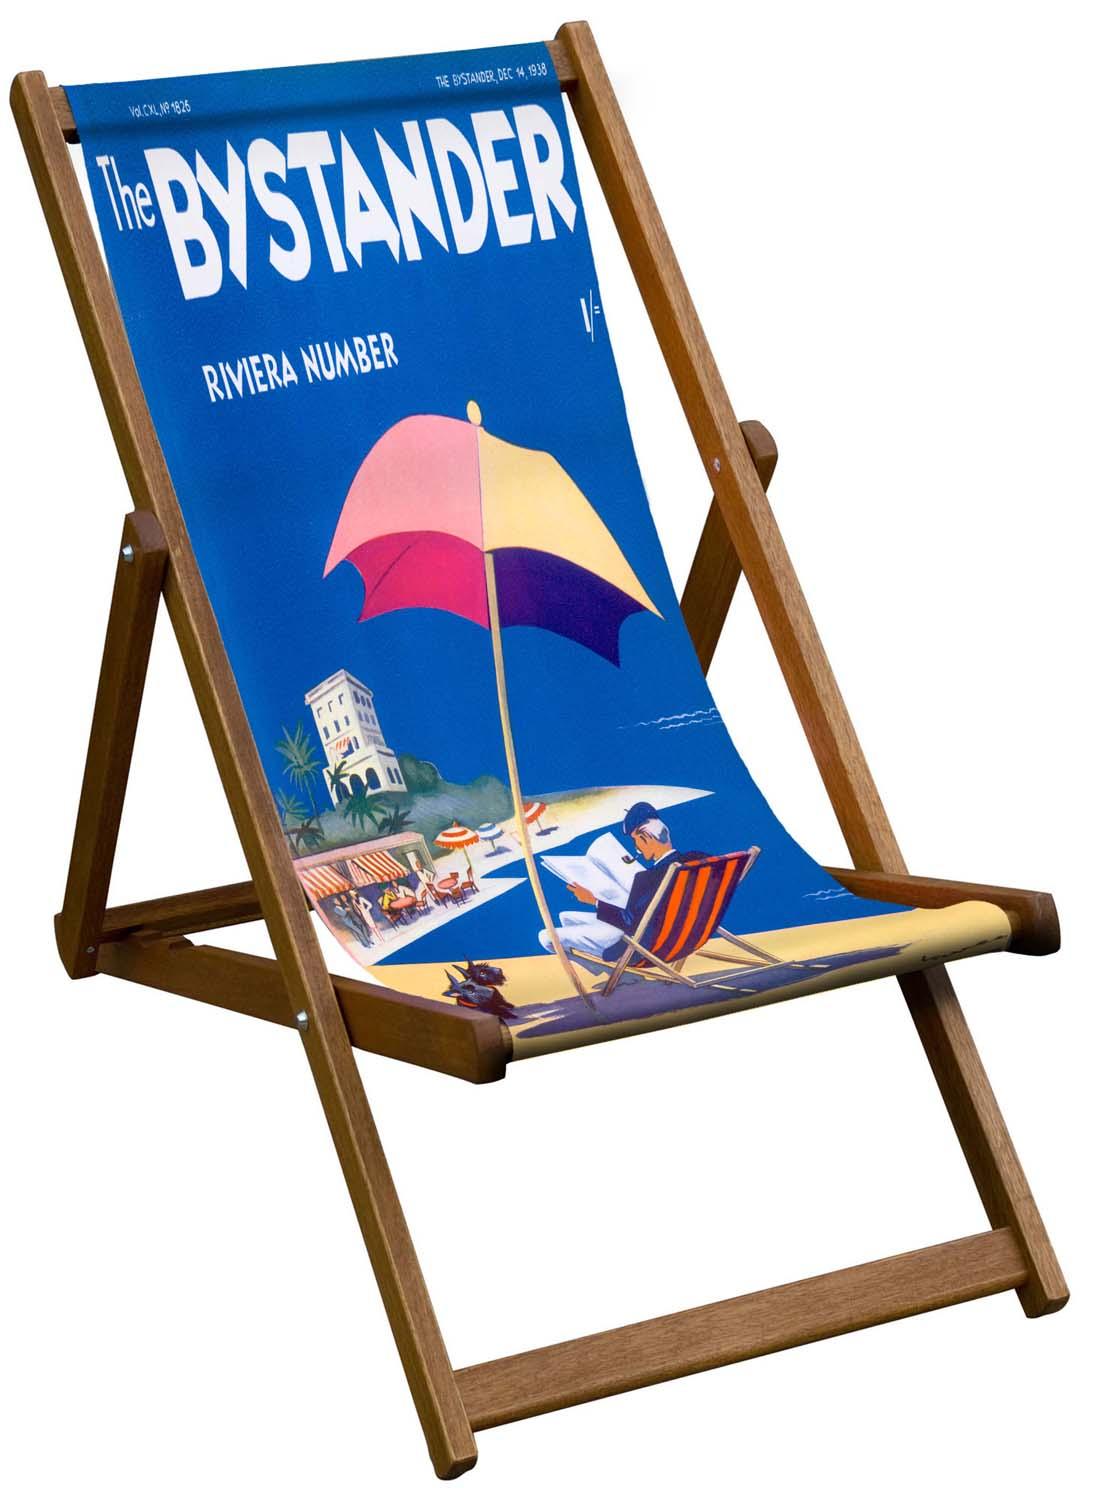 Bystander Man and Dogs - Art Print Travel Deckchair